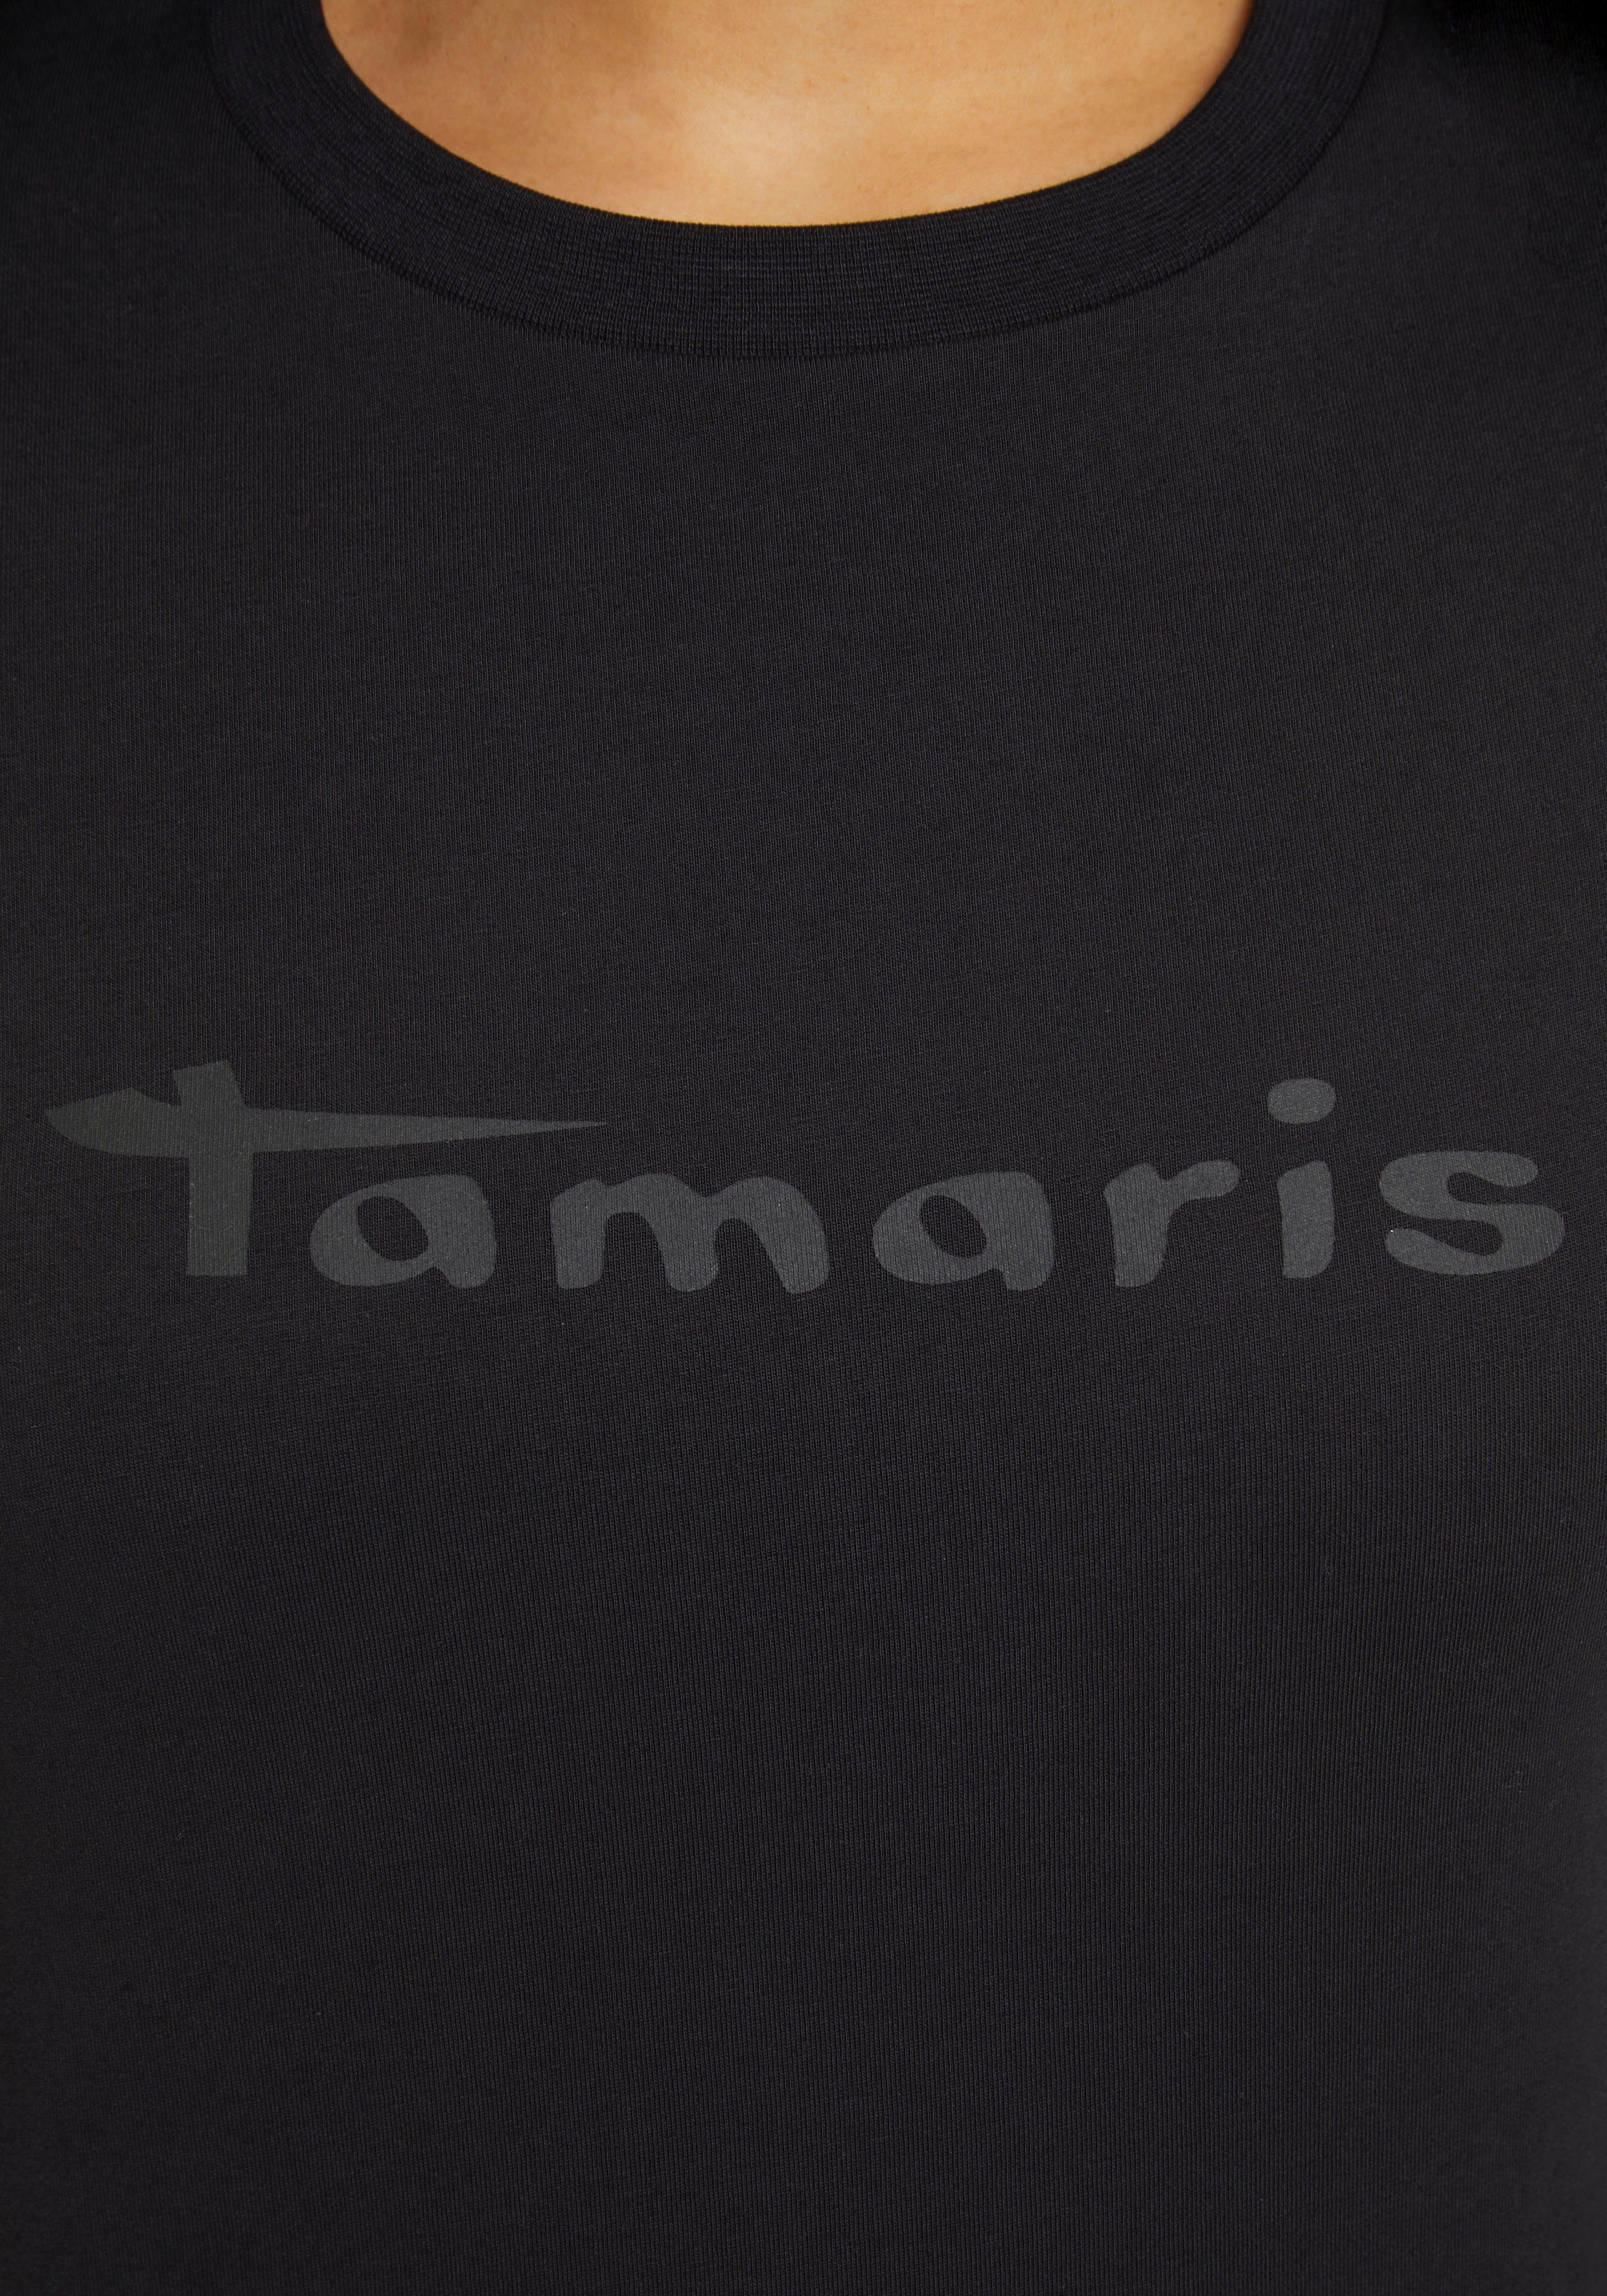 T-Shirt NEUE black Tamaris beauty Rundhalsausschnitt - mit KOLLEKTION